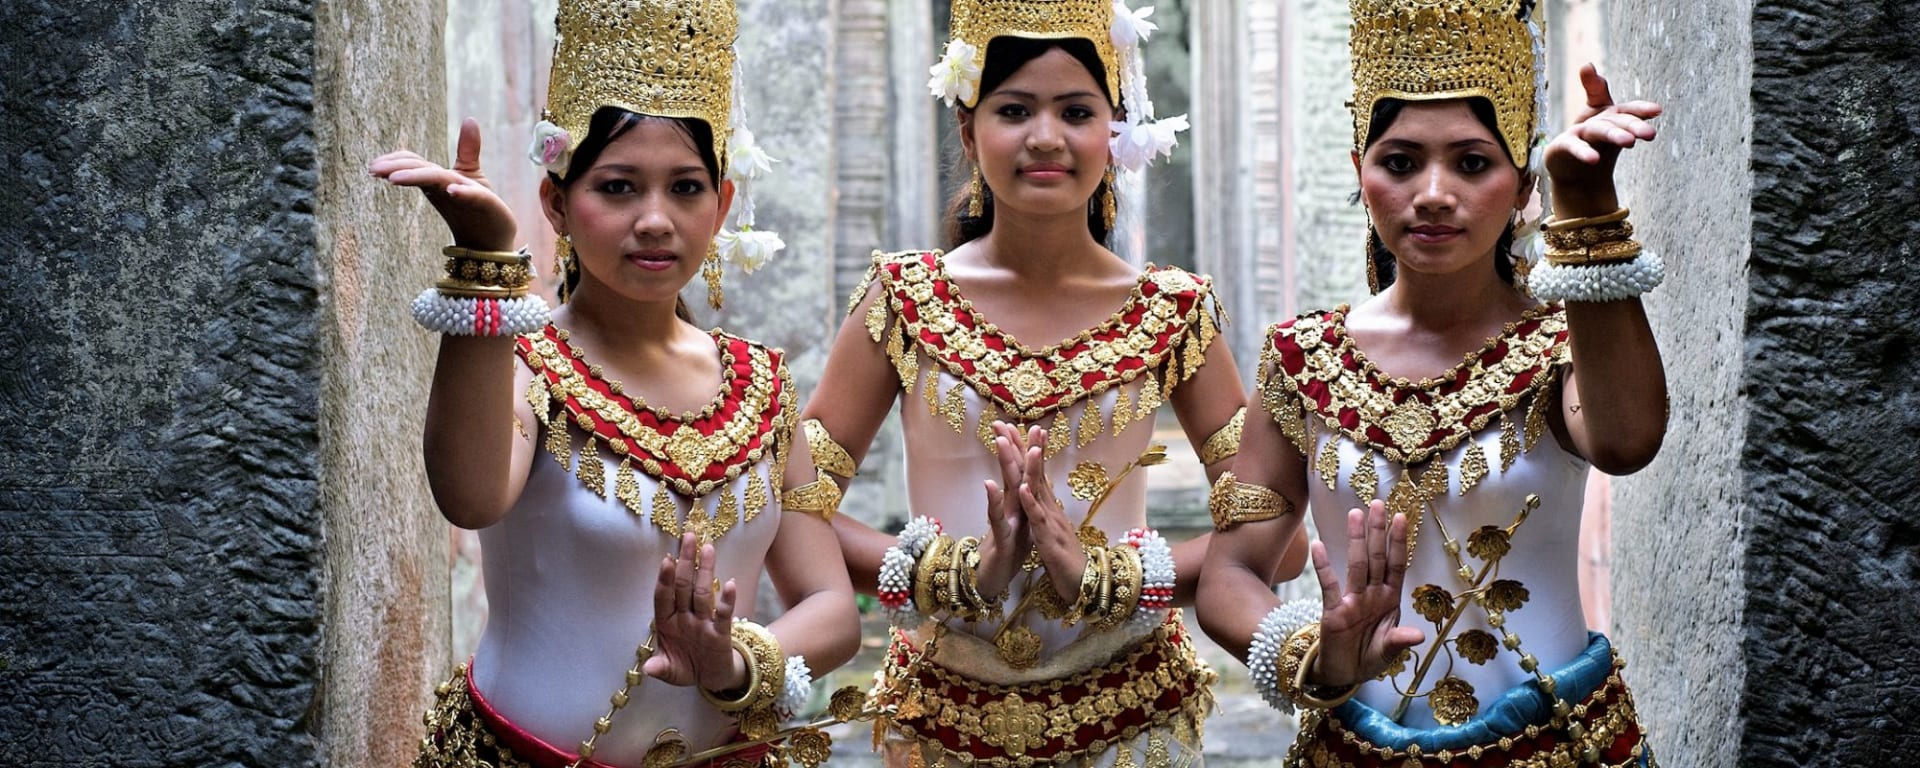 Angkor mystique de Siem Reap: Siem Reap: Traditional dancers